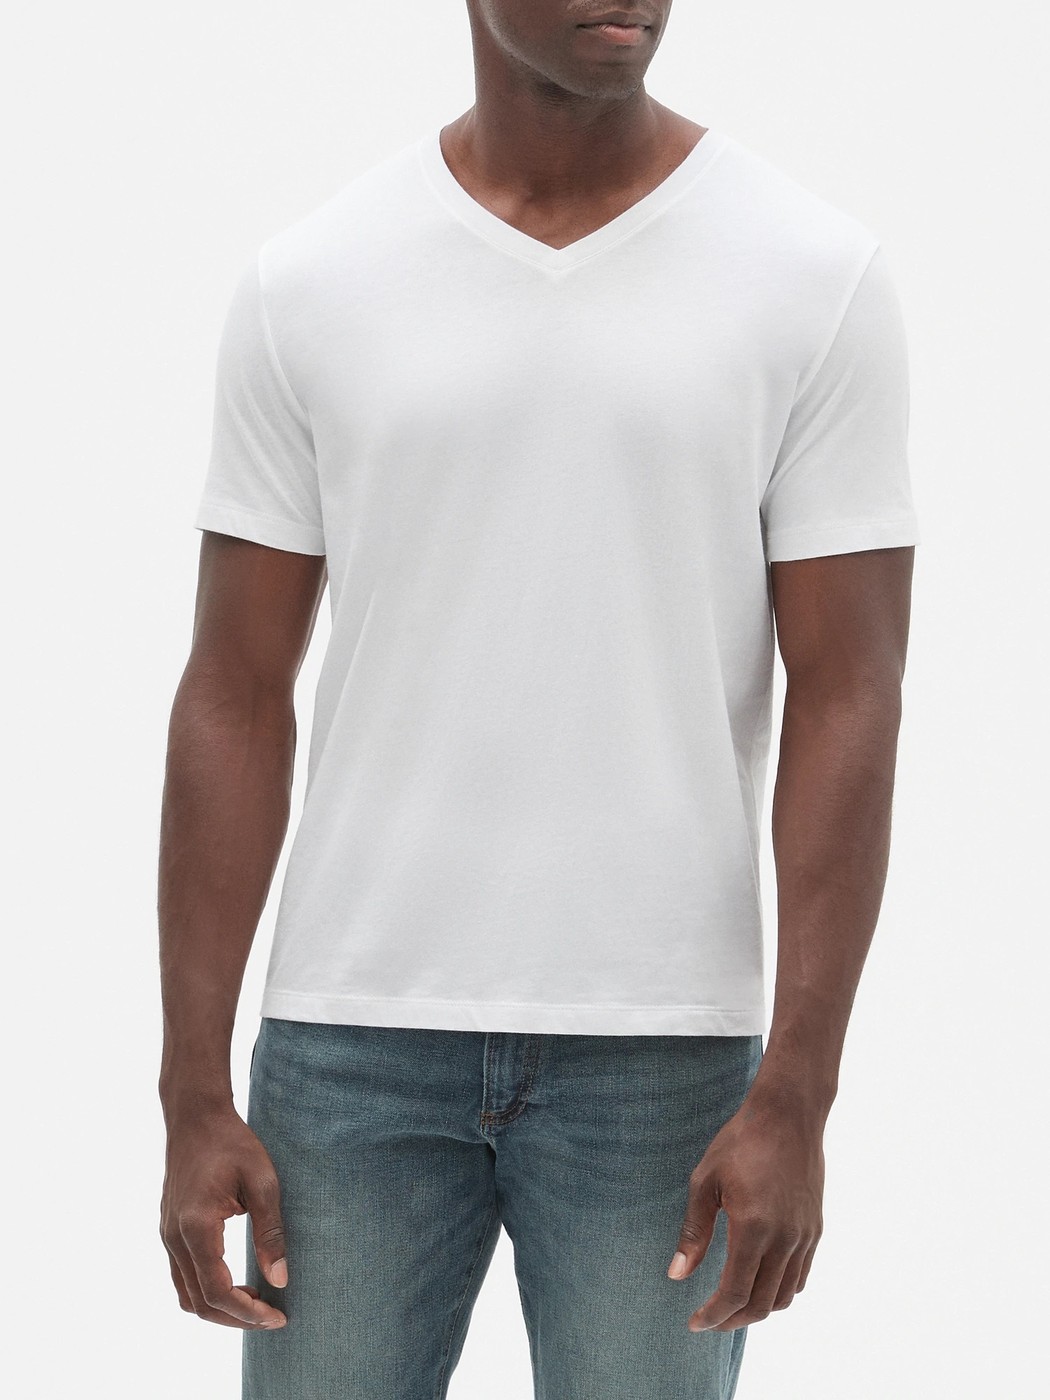 Белая футболка - мужская футболка GAP, M, M